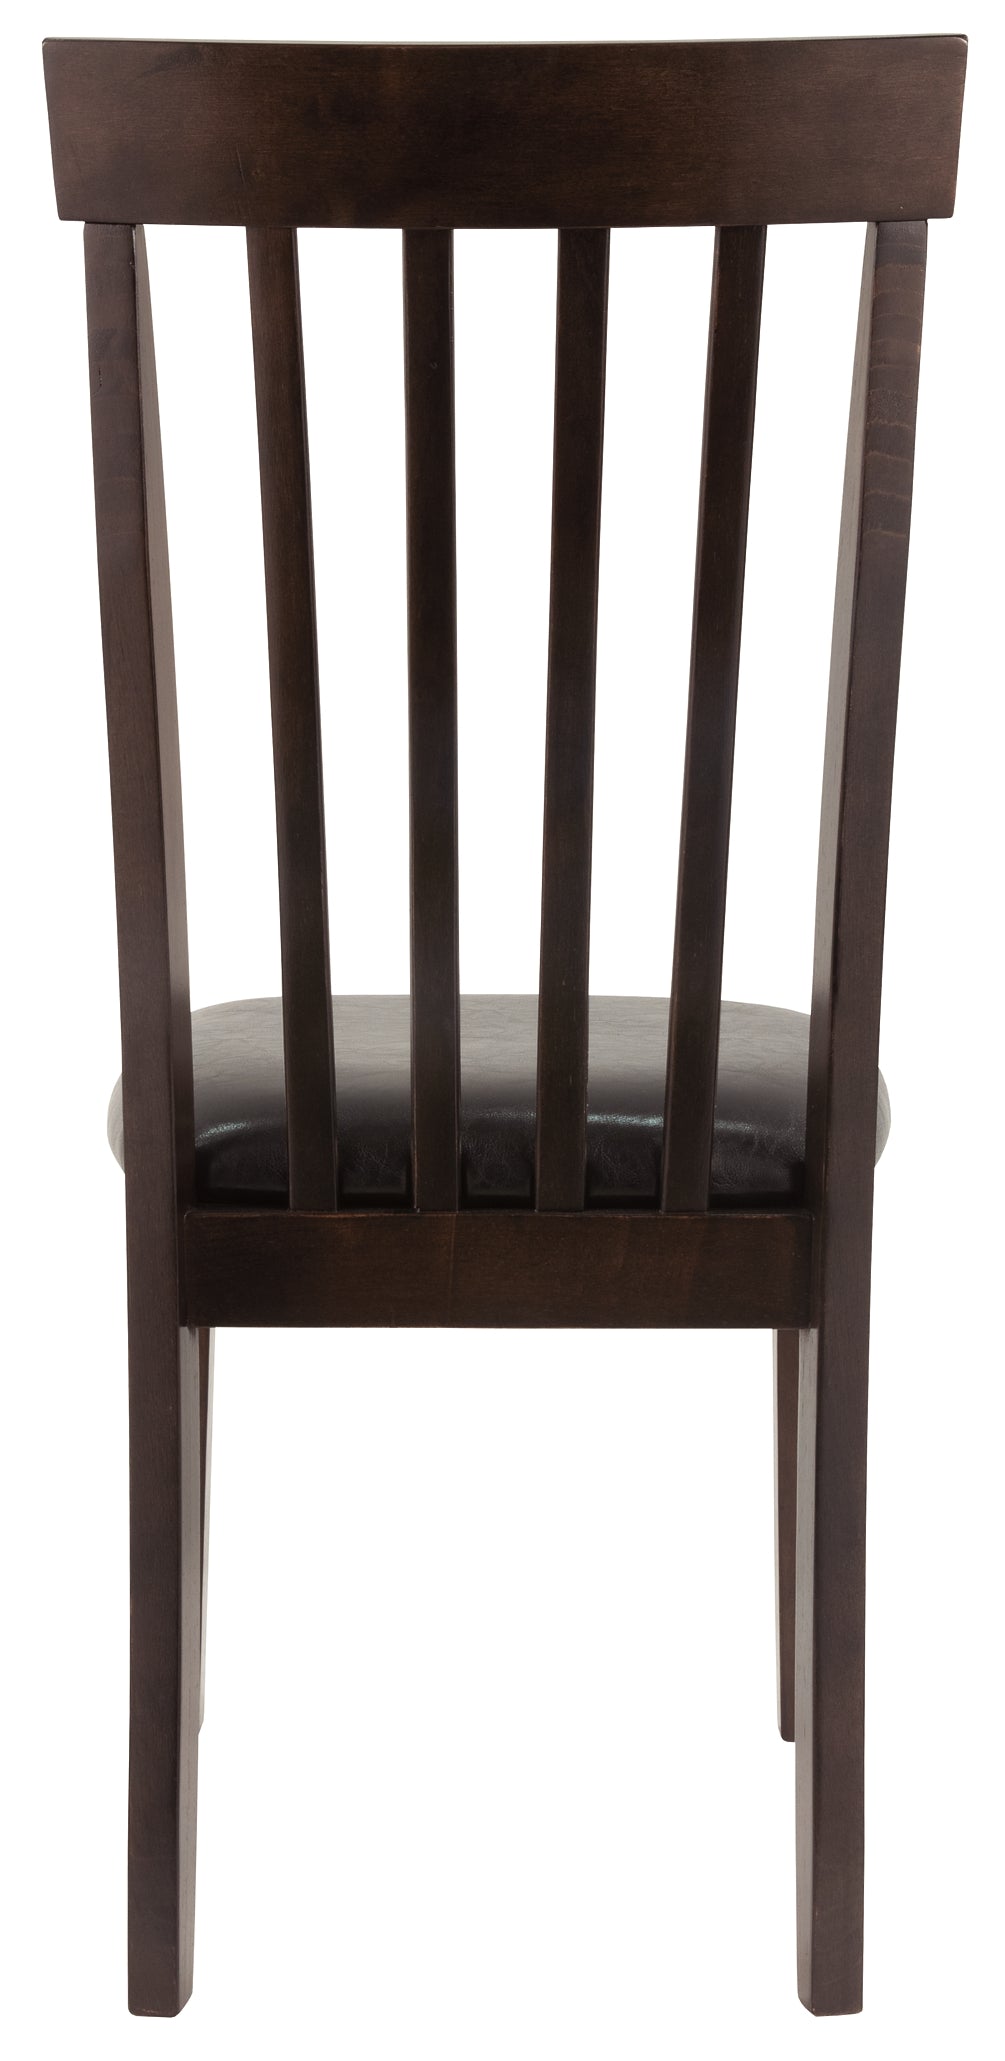 Hammis Dining UPH Side Chair (2/CN) JB's Furniture  Home Furniture, Home Decor, Furniture Store